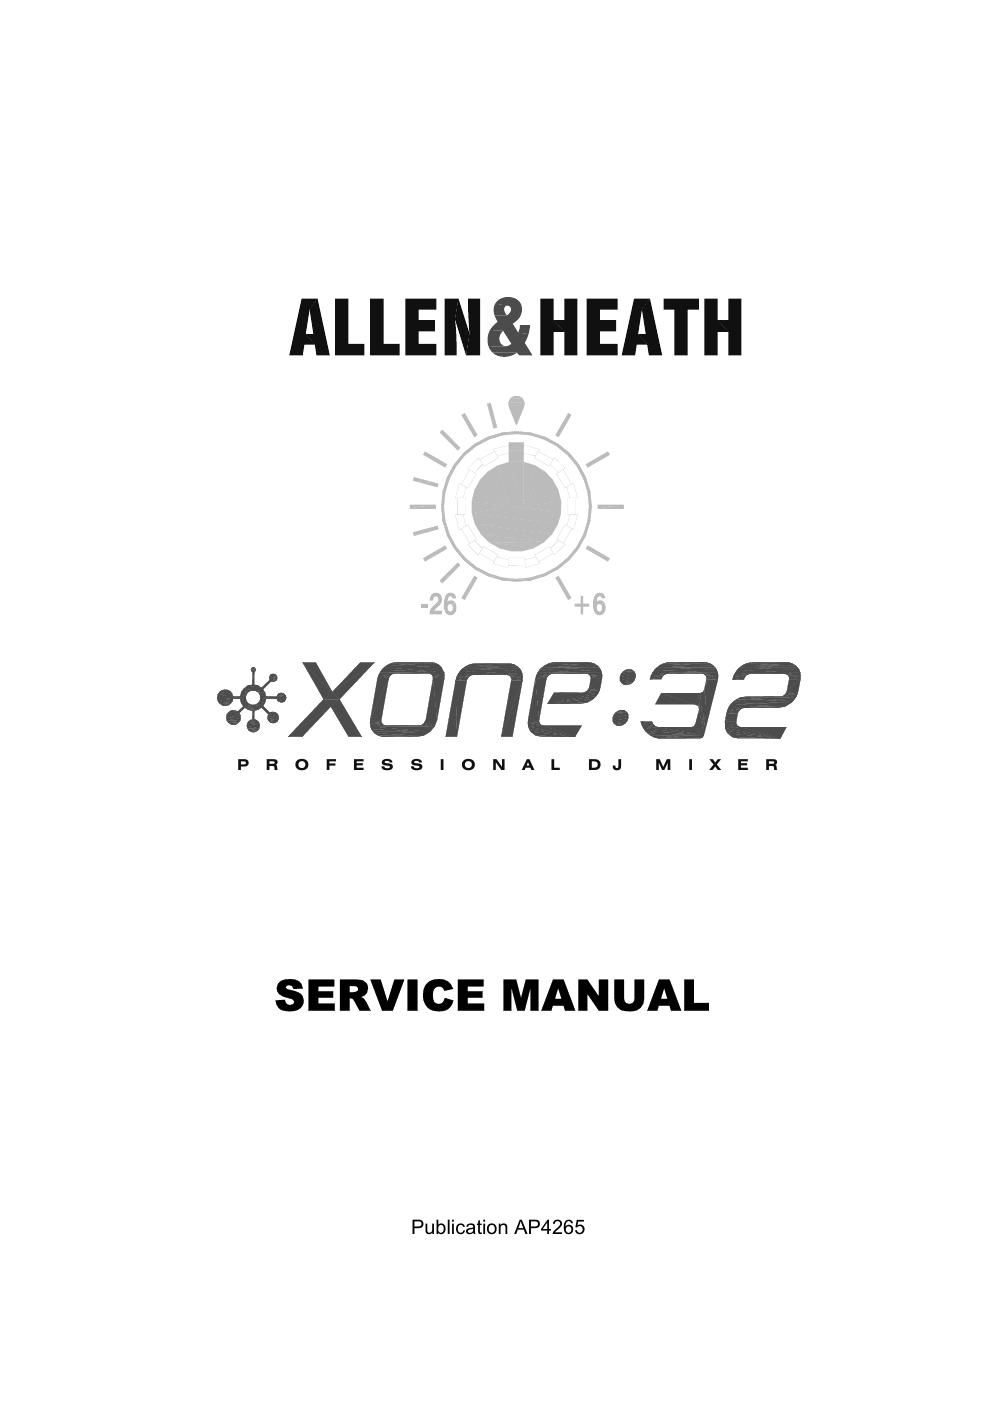 allen heath xone 32 dj mixer service manual